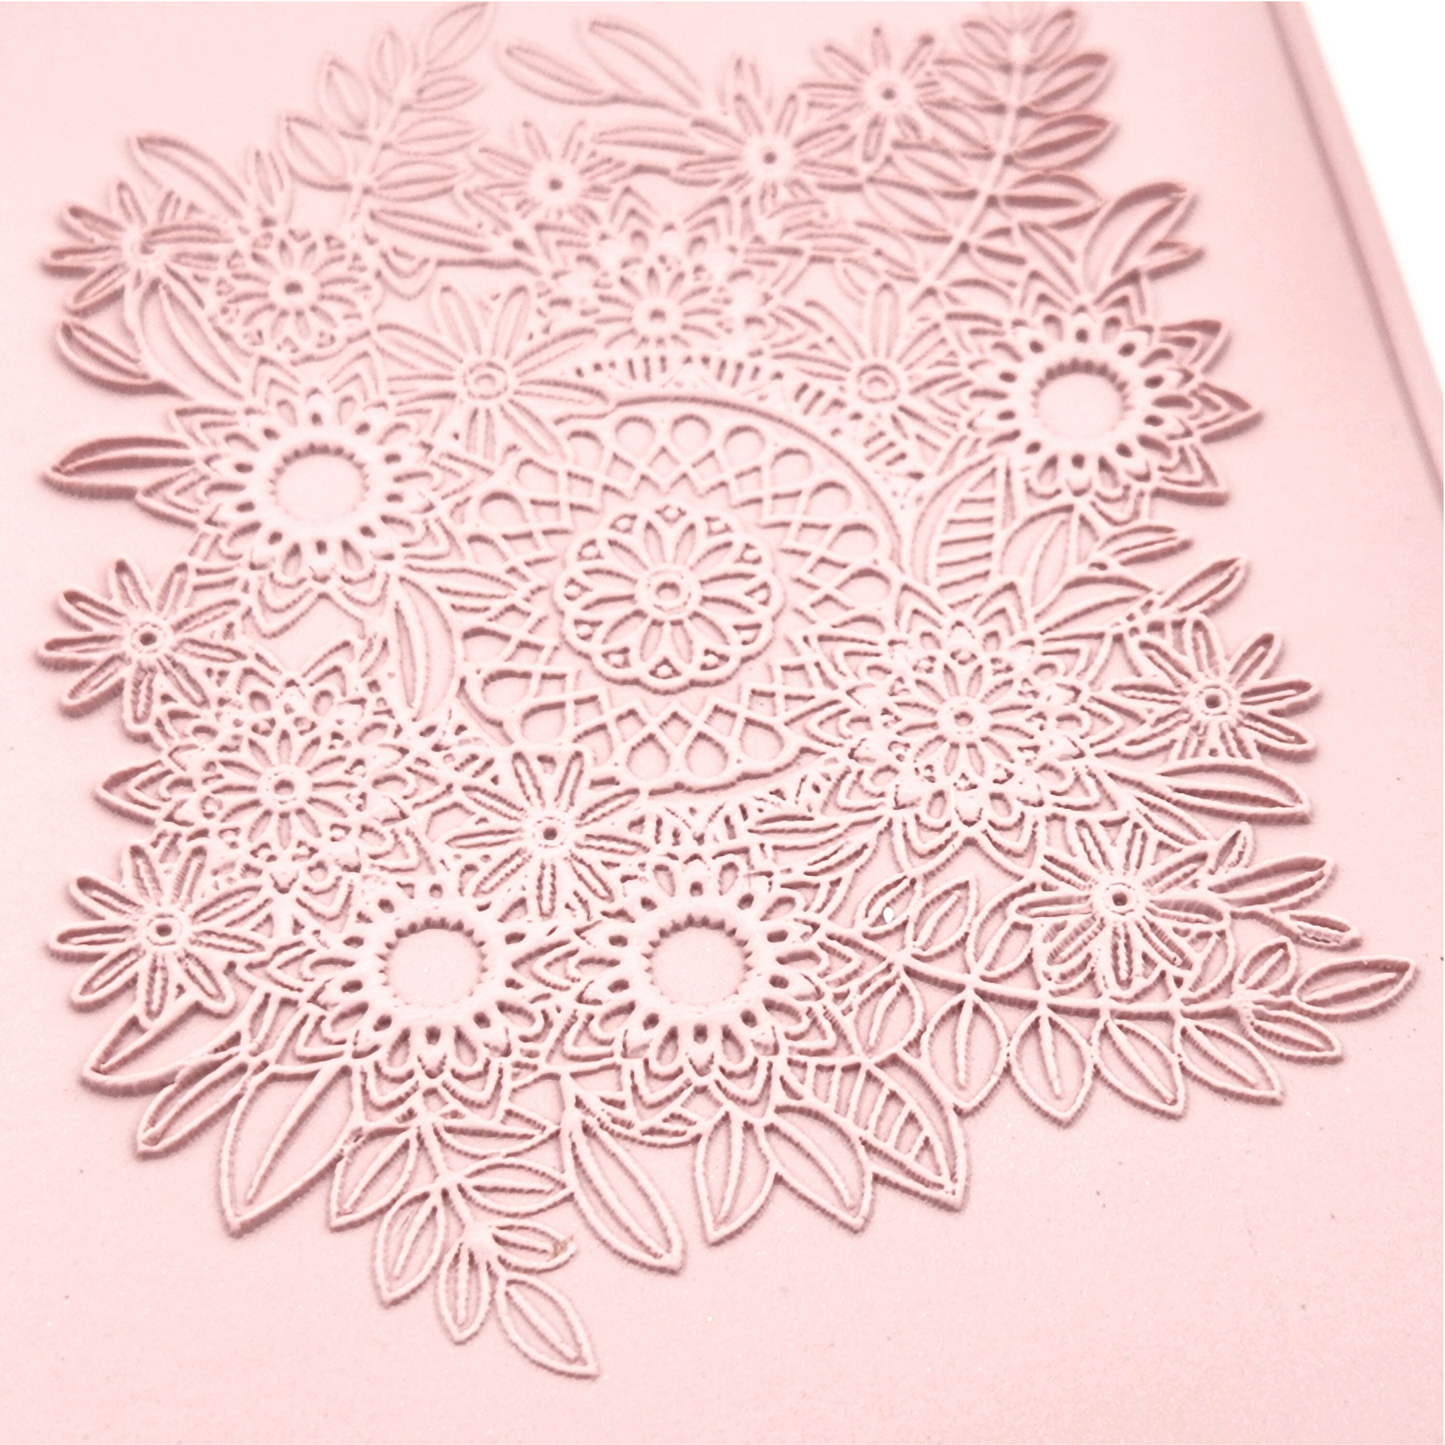 Full Flower Mandala texture details on polymer clay slab